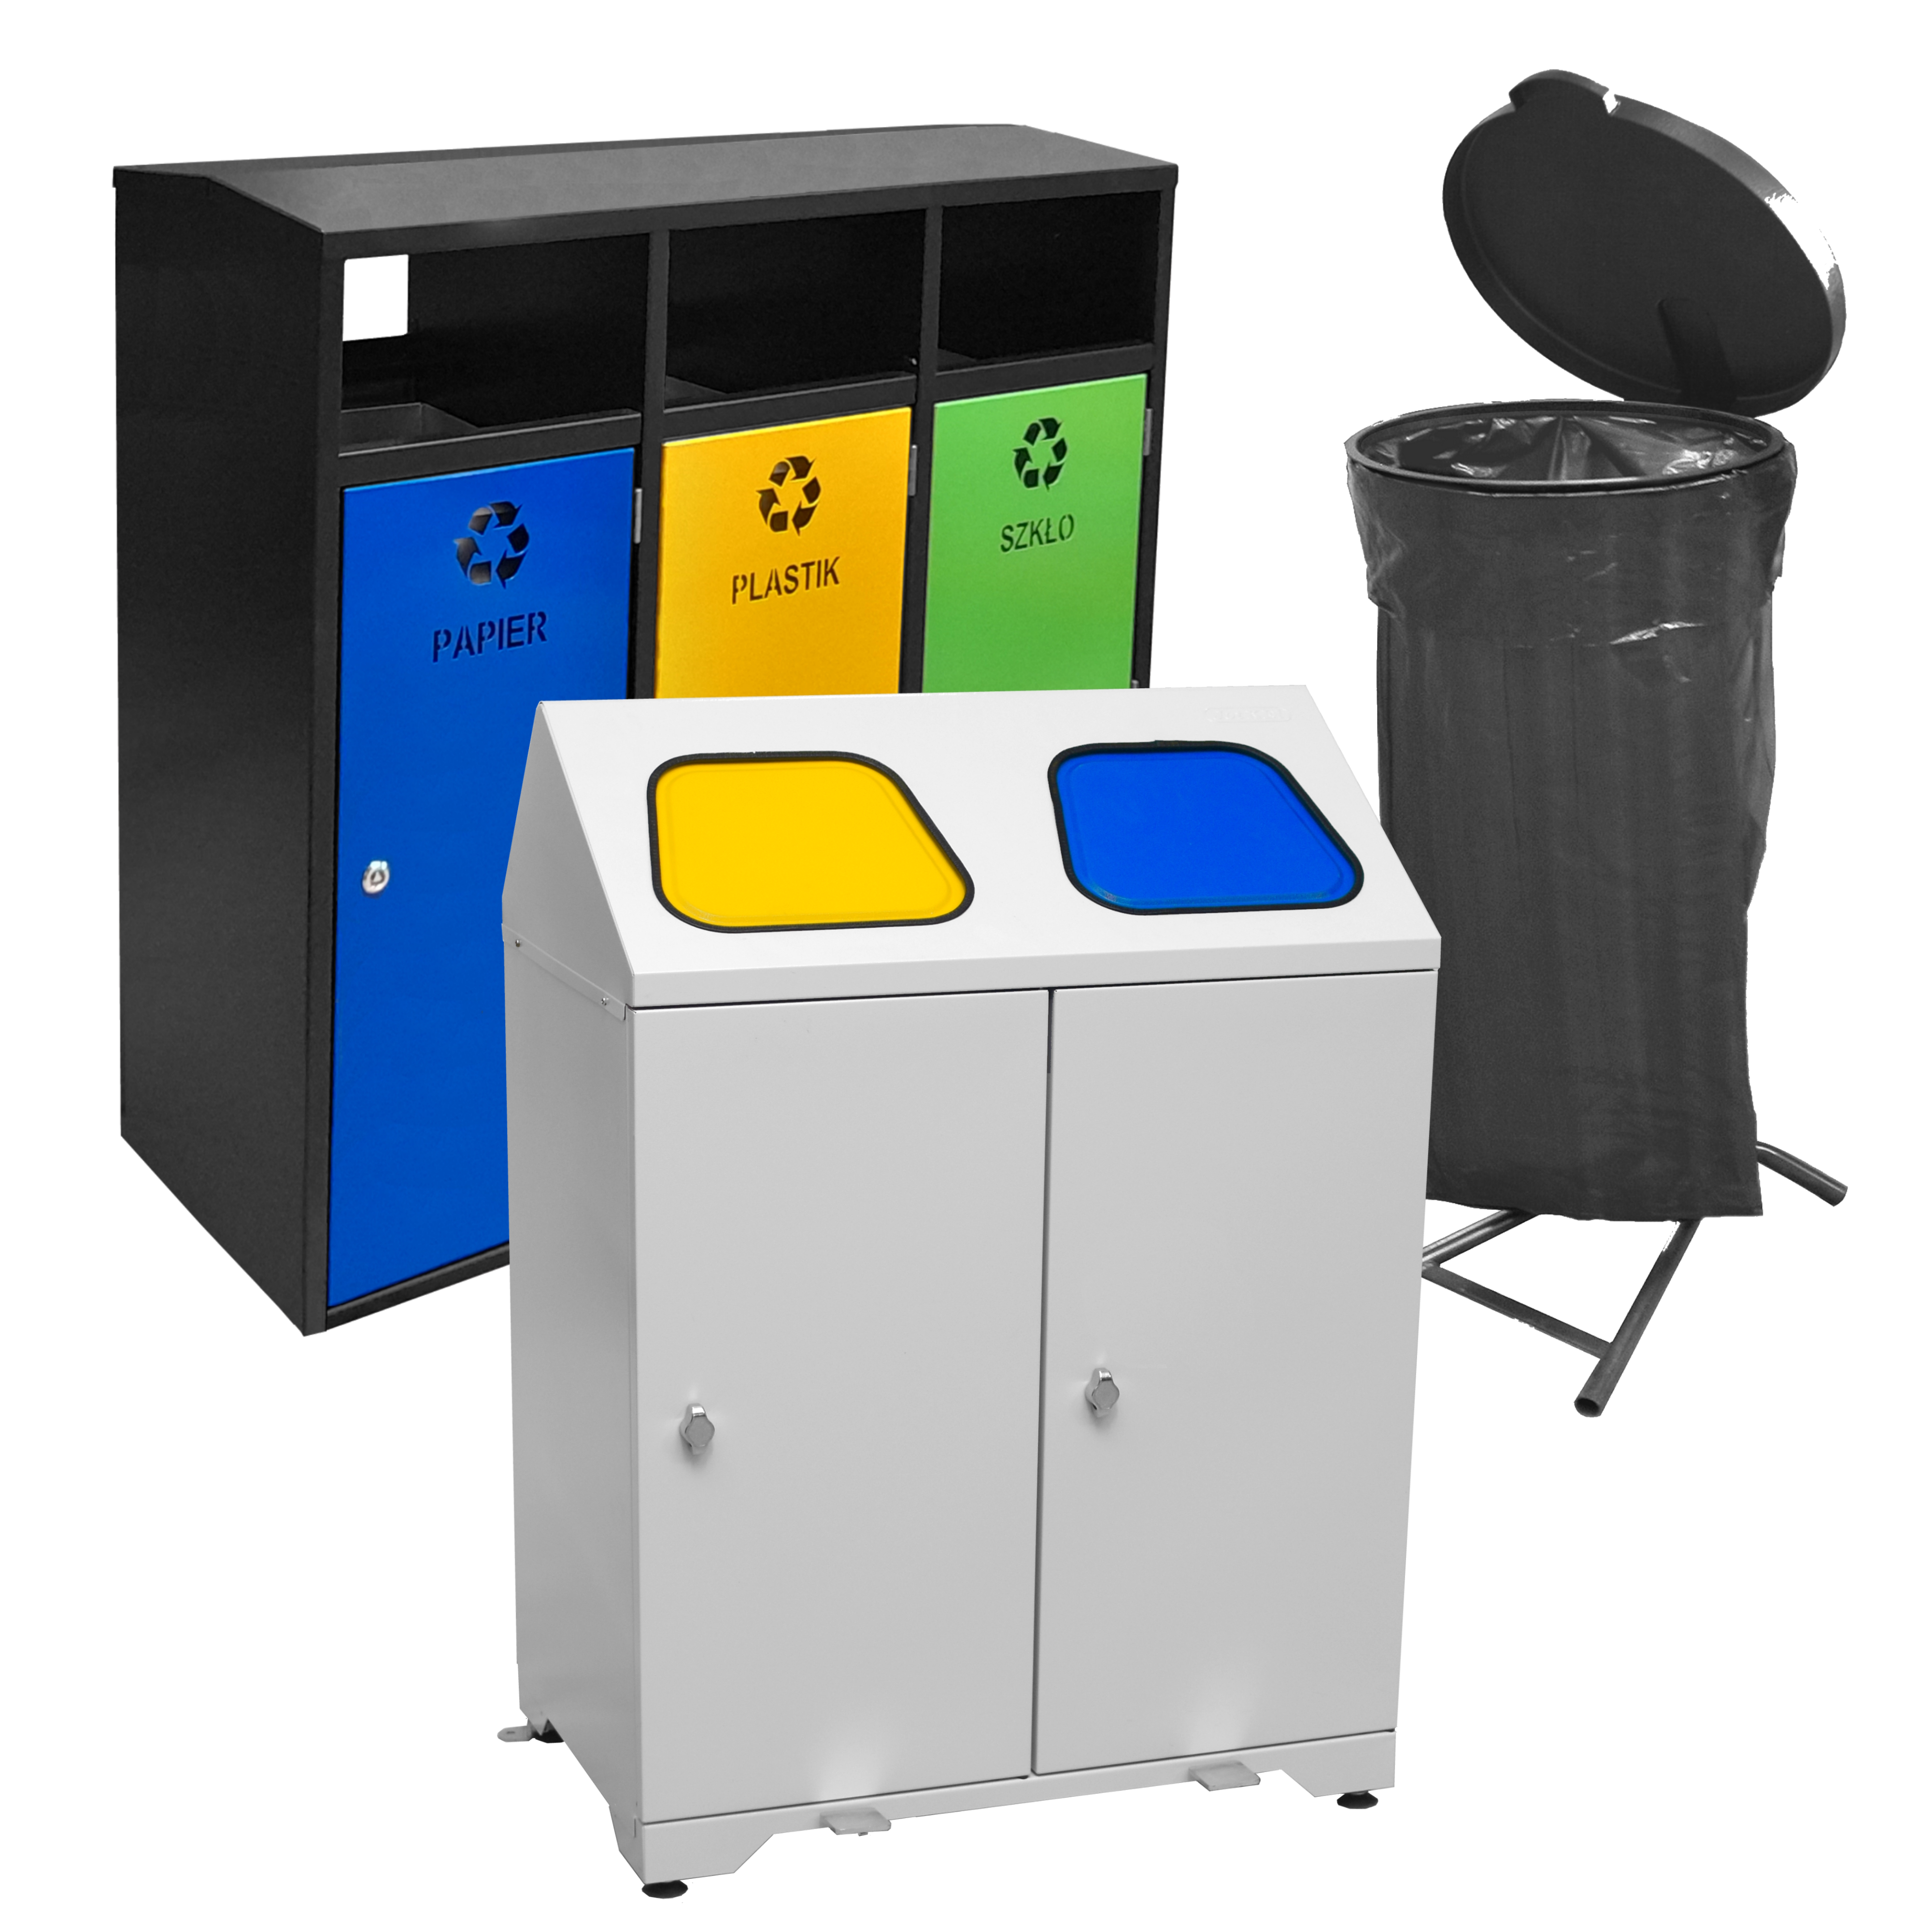 ENV - waste sorting, metal rubbish bins